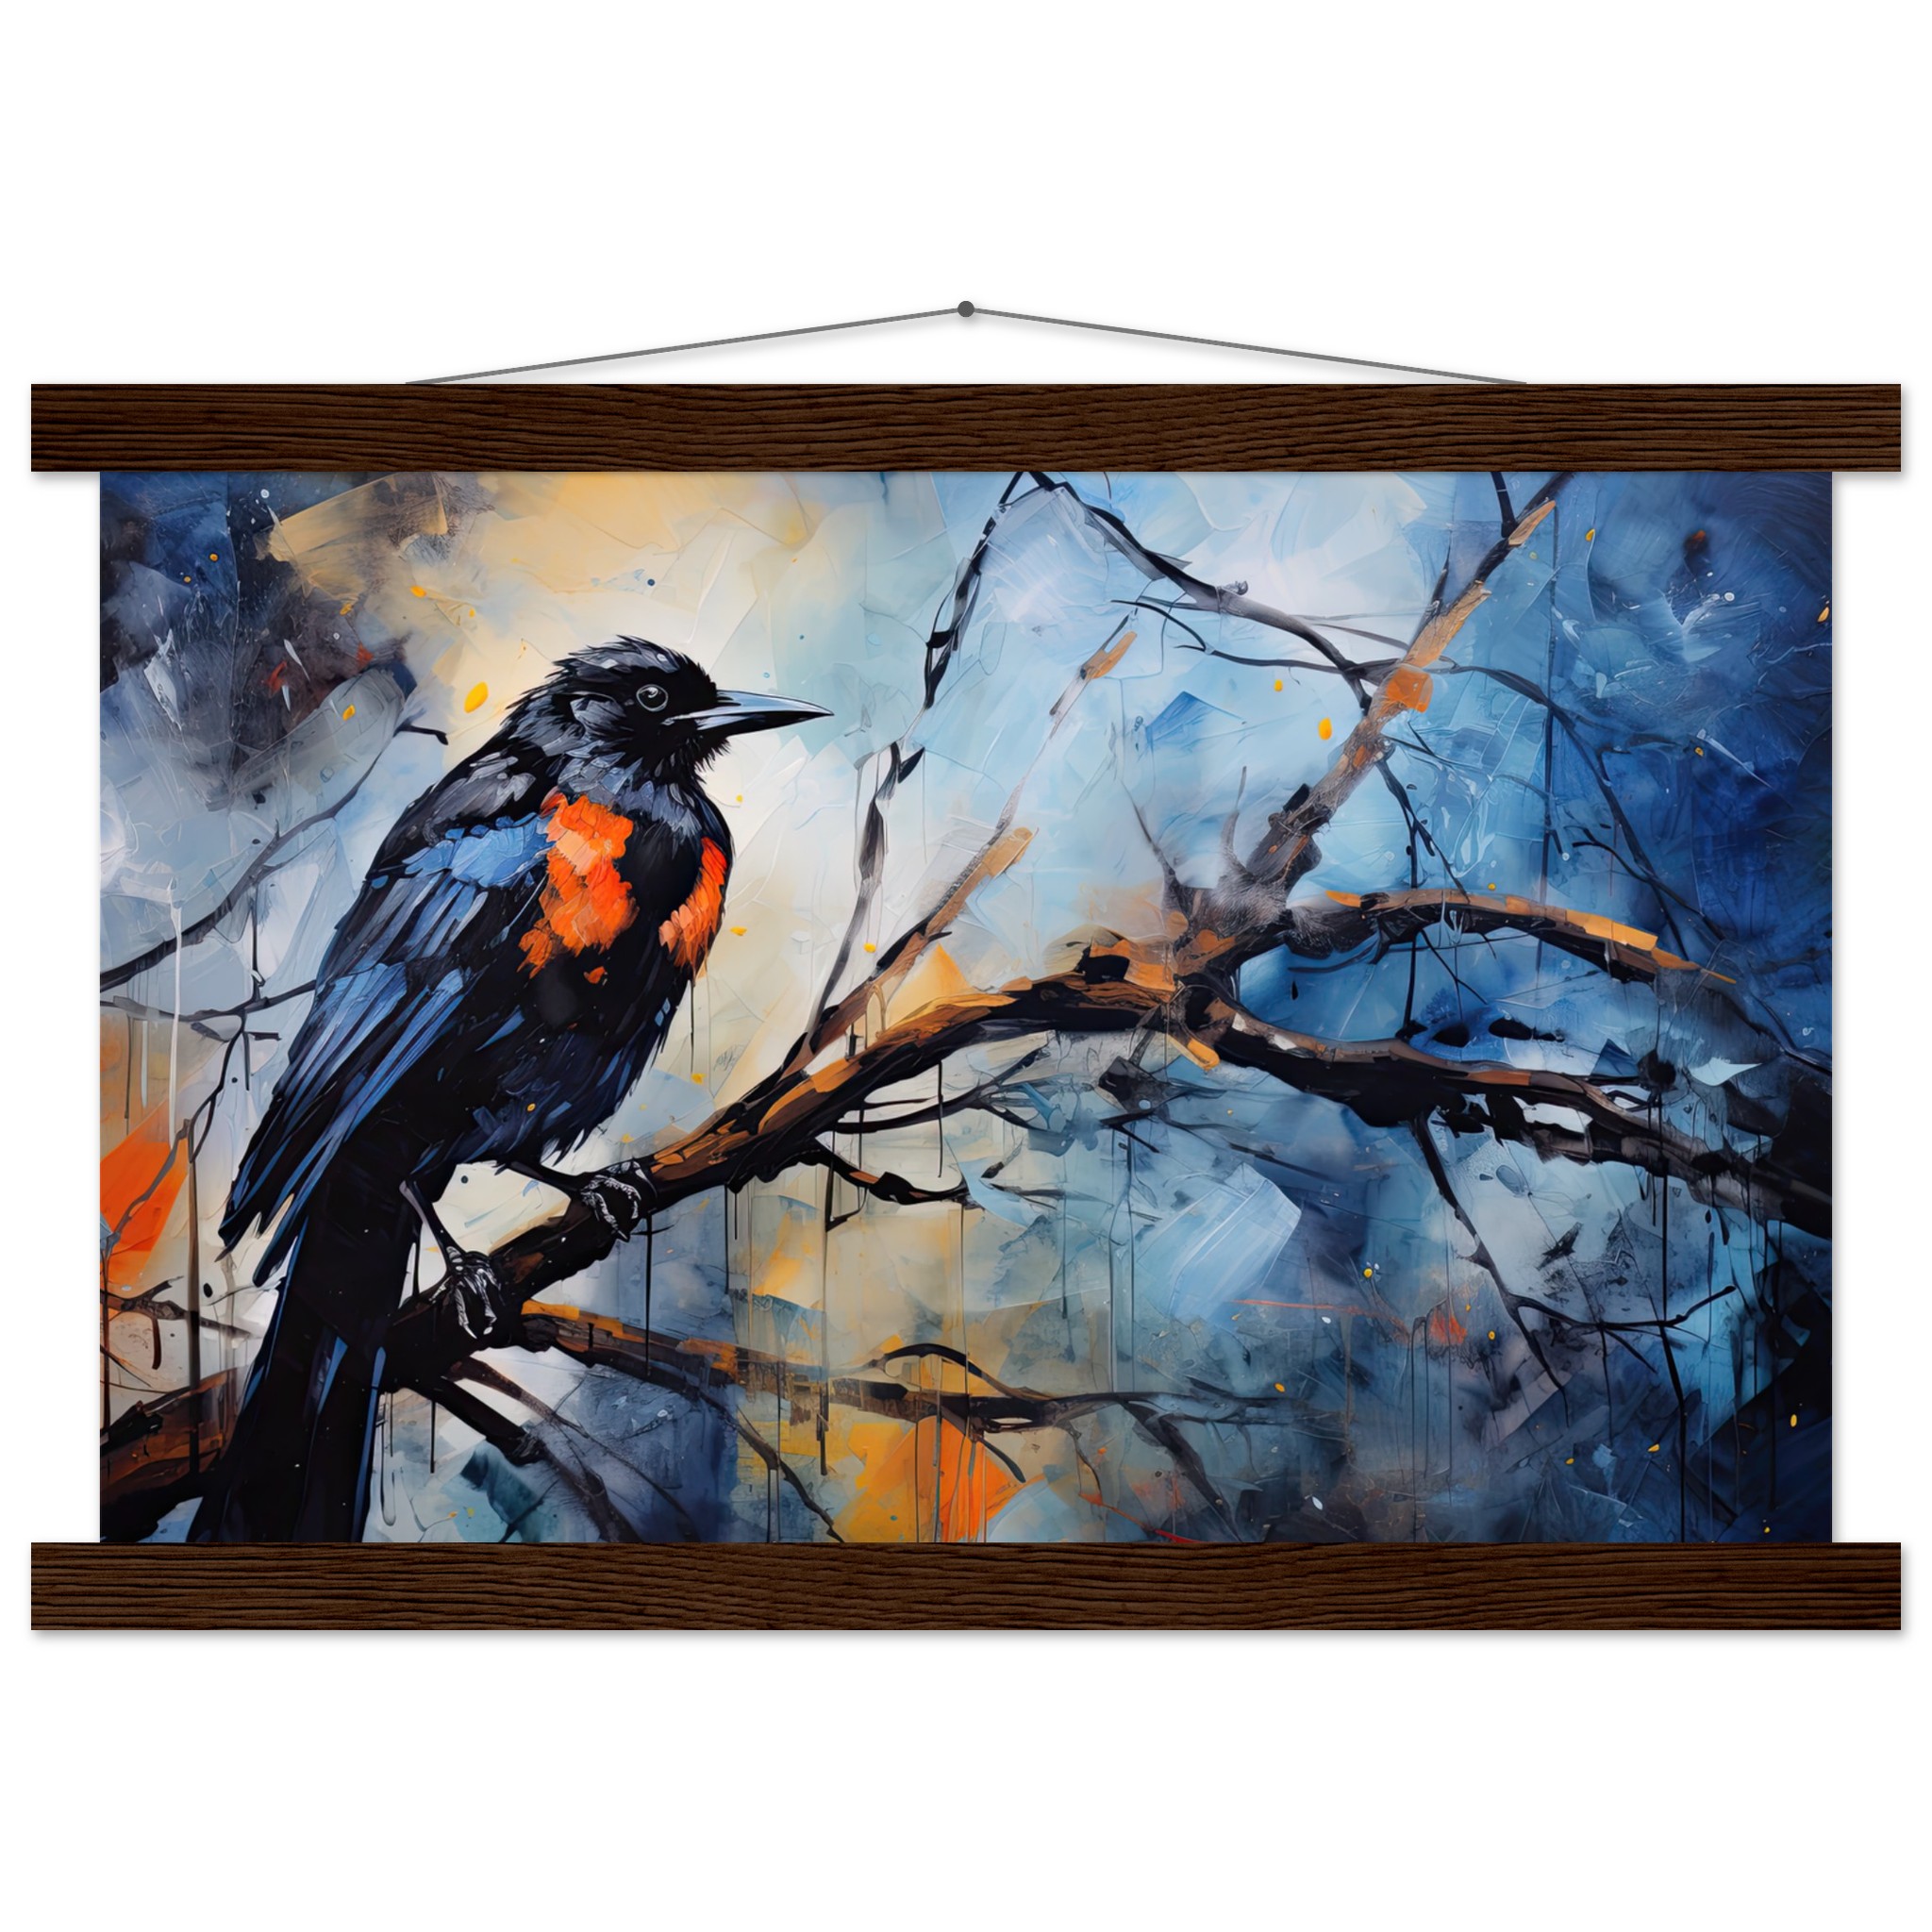 Bird Watercolor Painting Abstract Hanging Print – 30×45 cm / 12×18″, Dark wood wall hanger